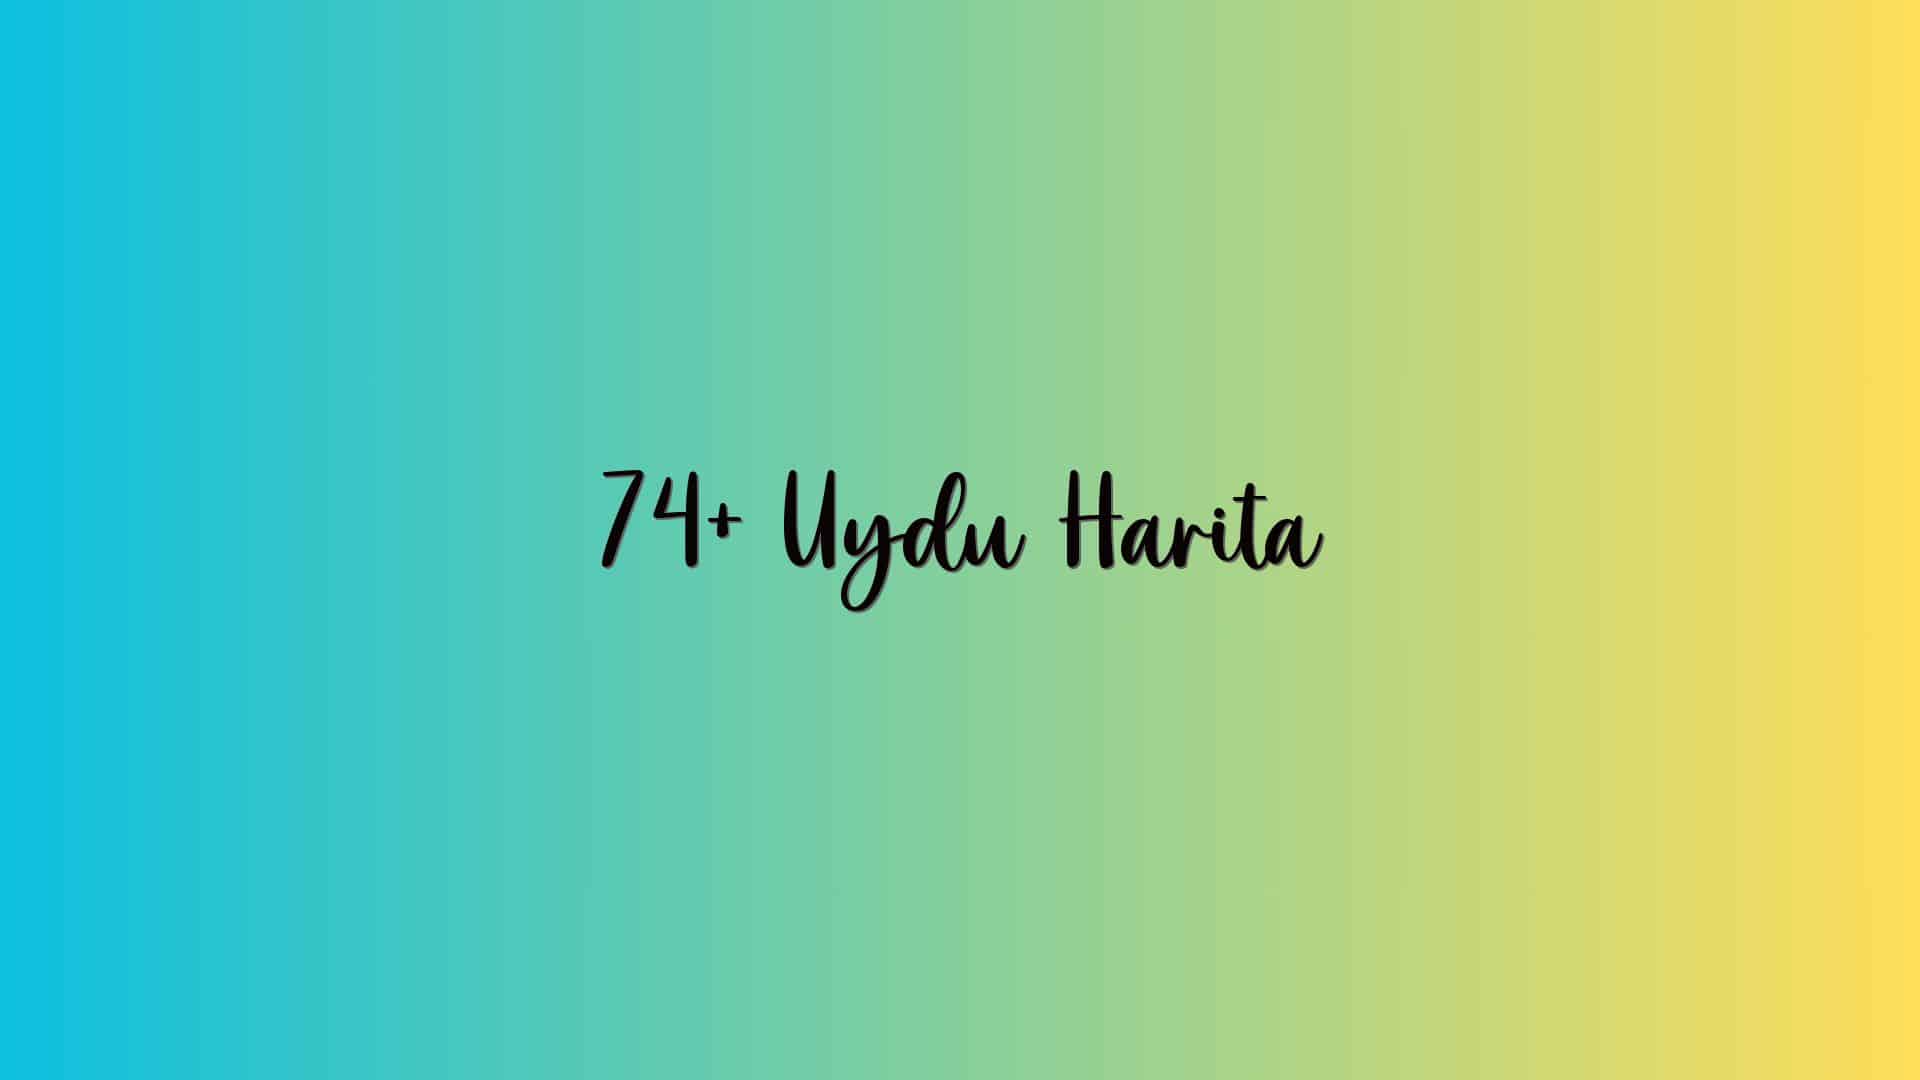 74+ Uydu Harita